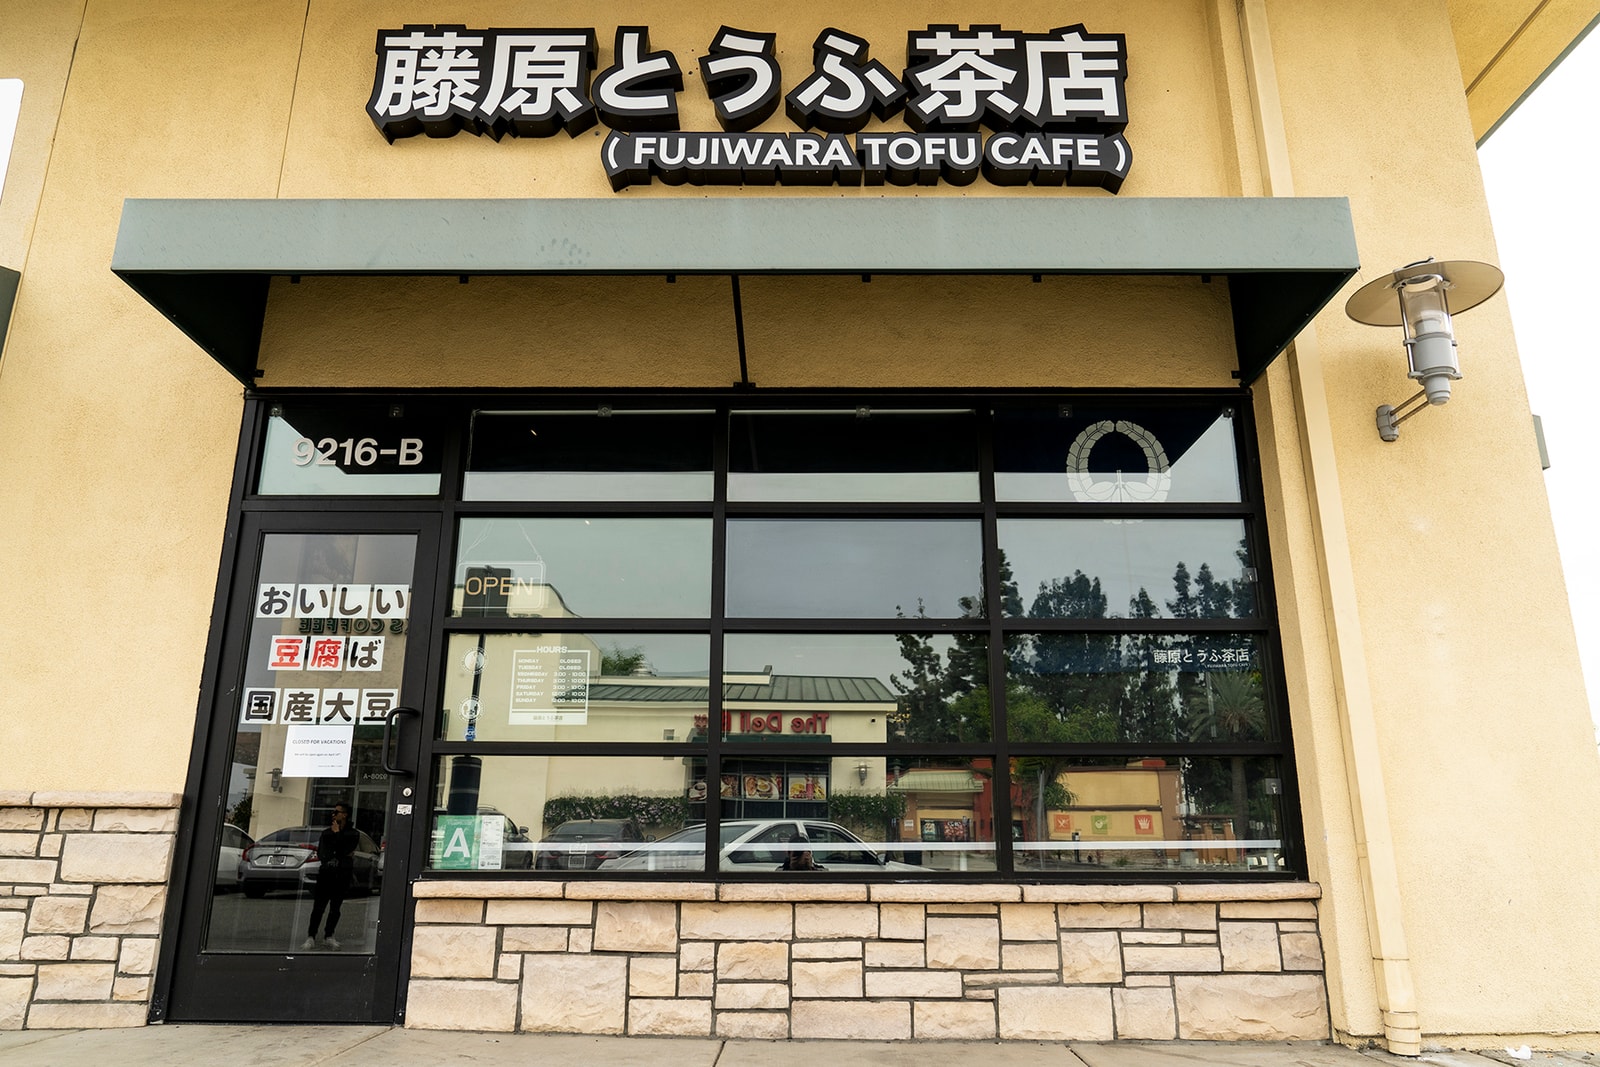 Vincent Chan's Initial D Inspired Corolla SR5 Fujiwara Tofu Shop Cafe AE86 Panda